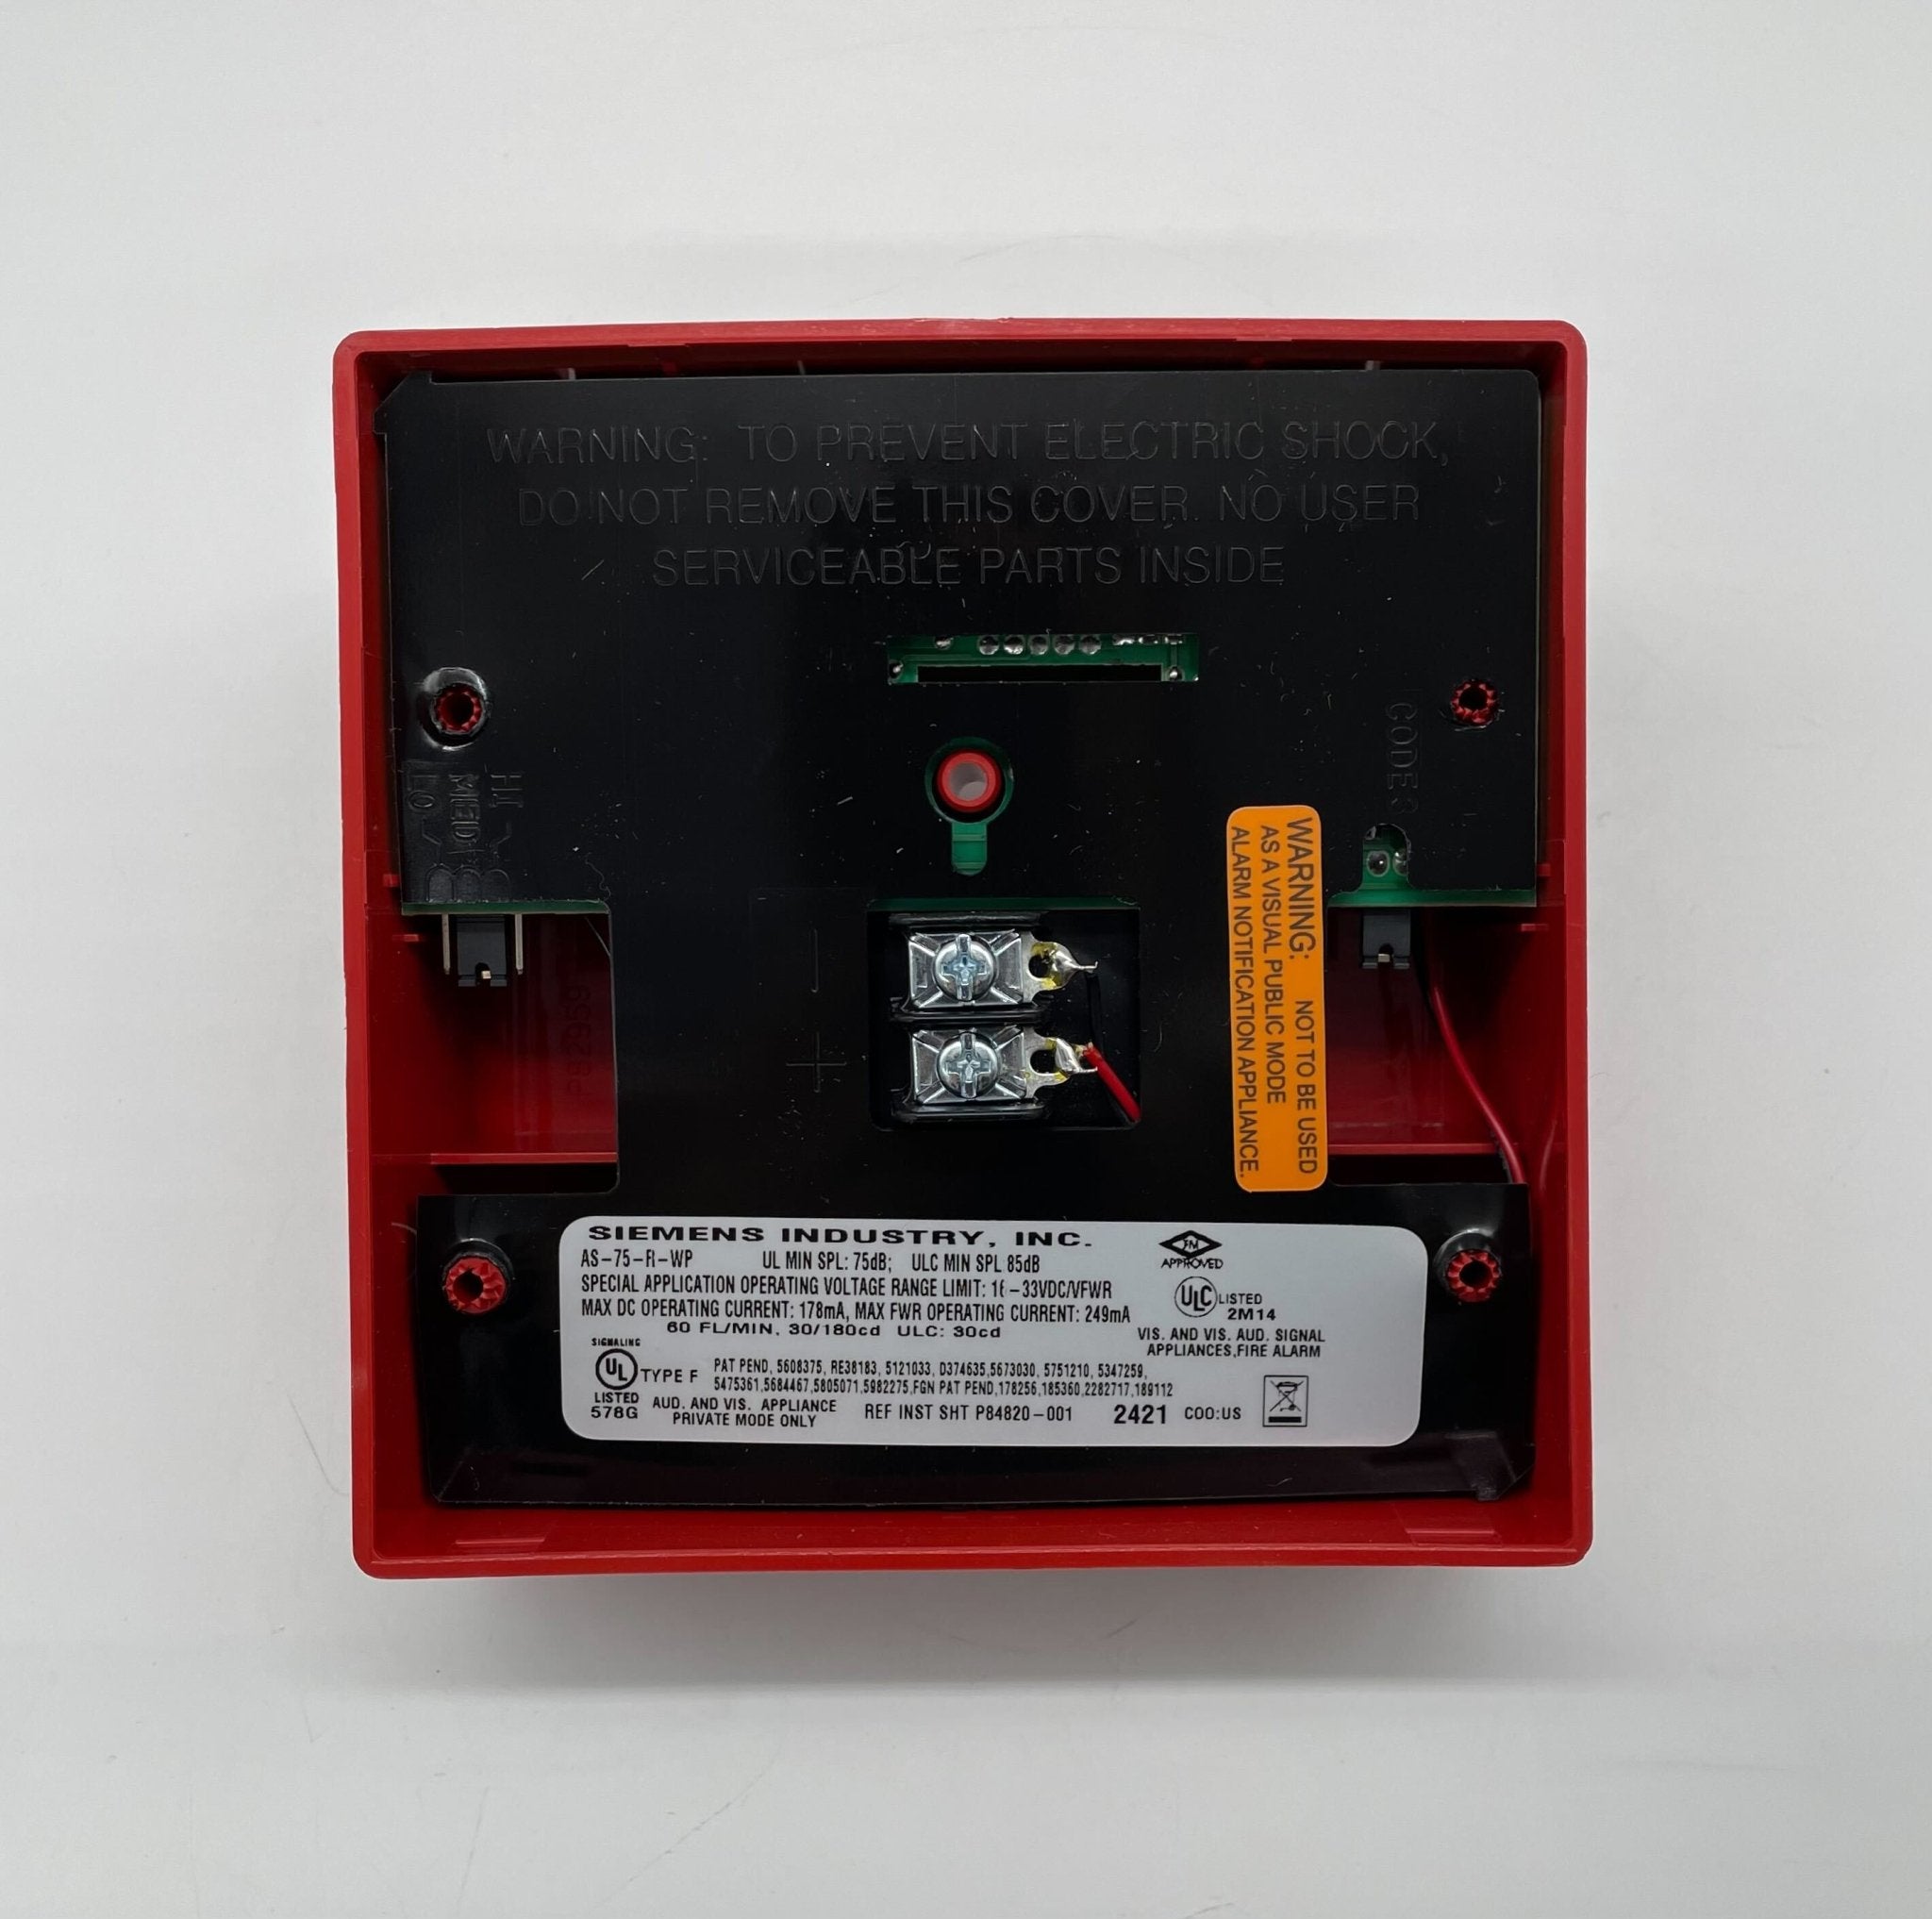 Siemens AS-75-R-WP - The Fire Alarm Supplier